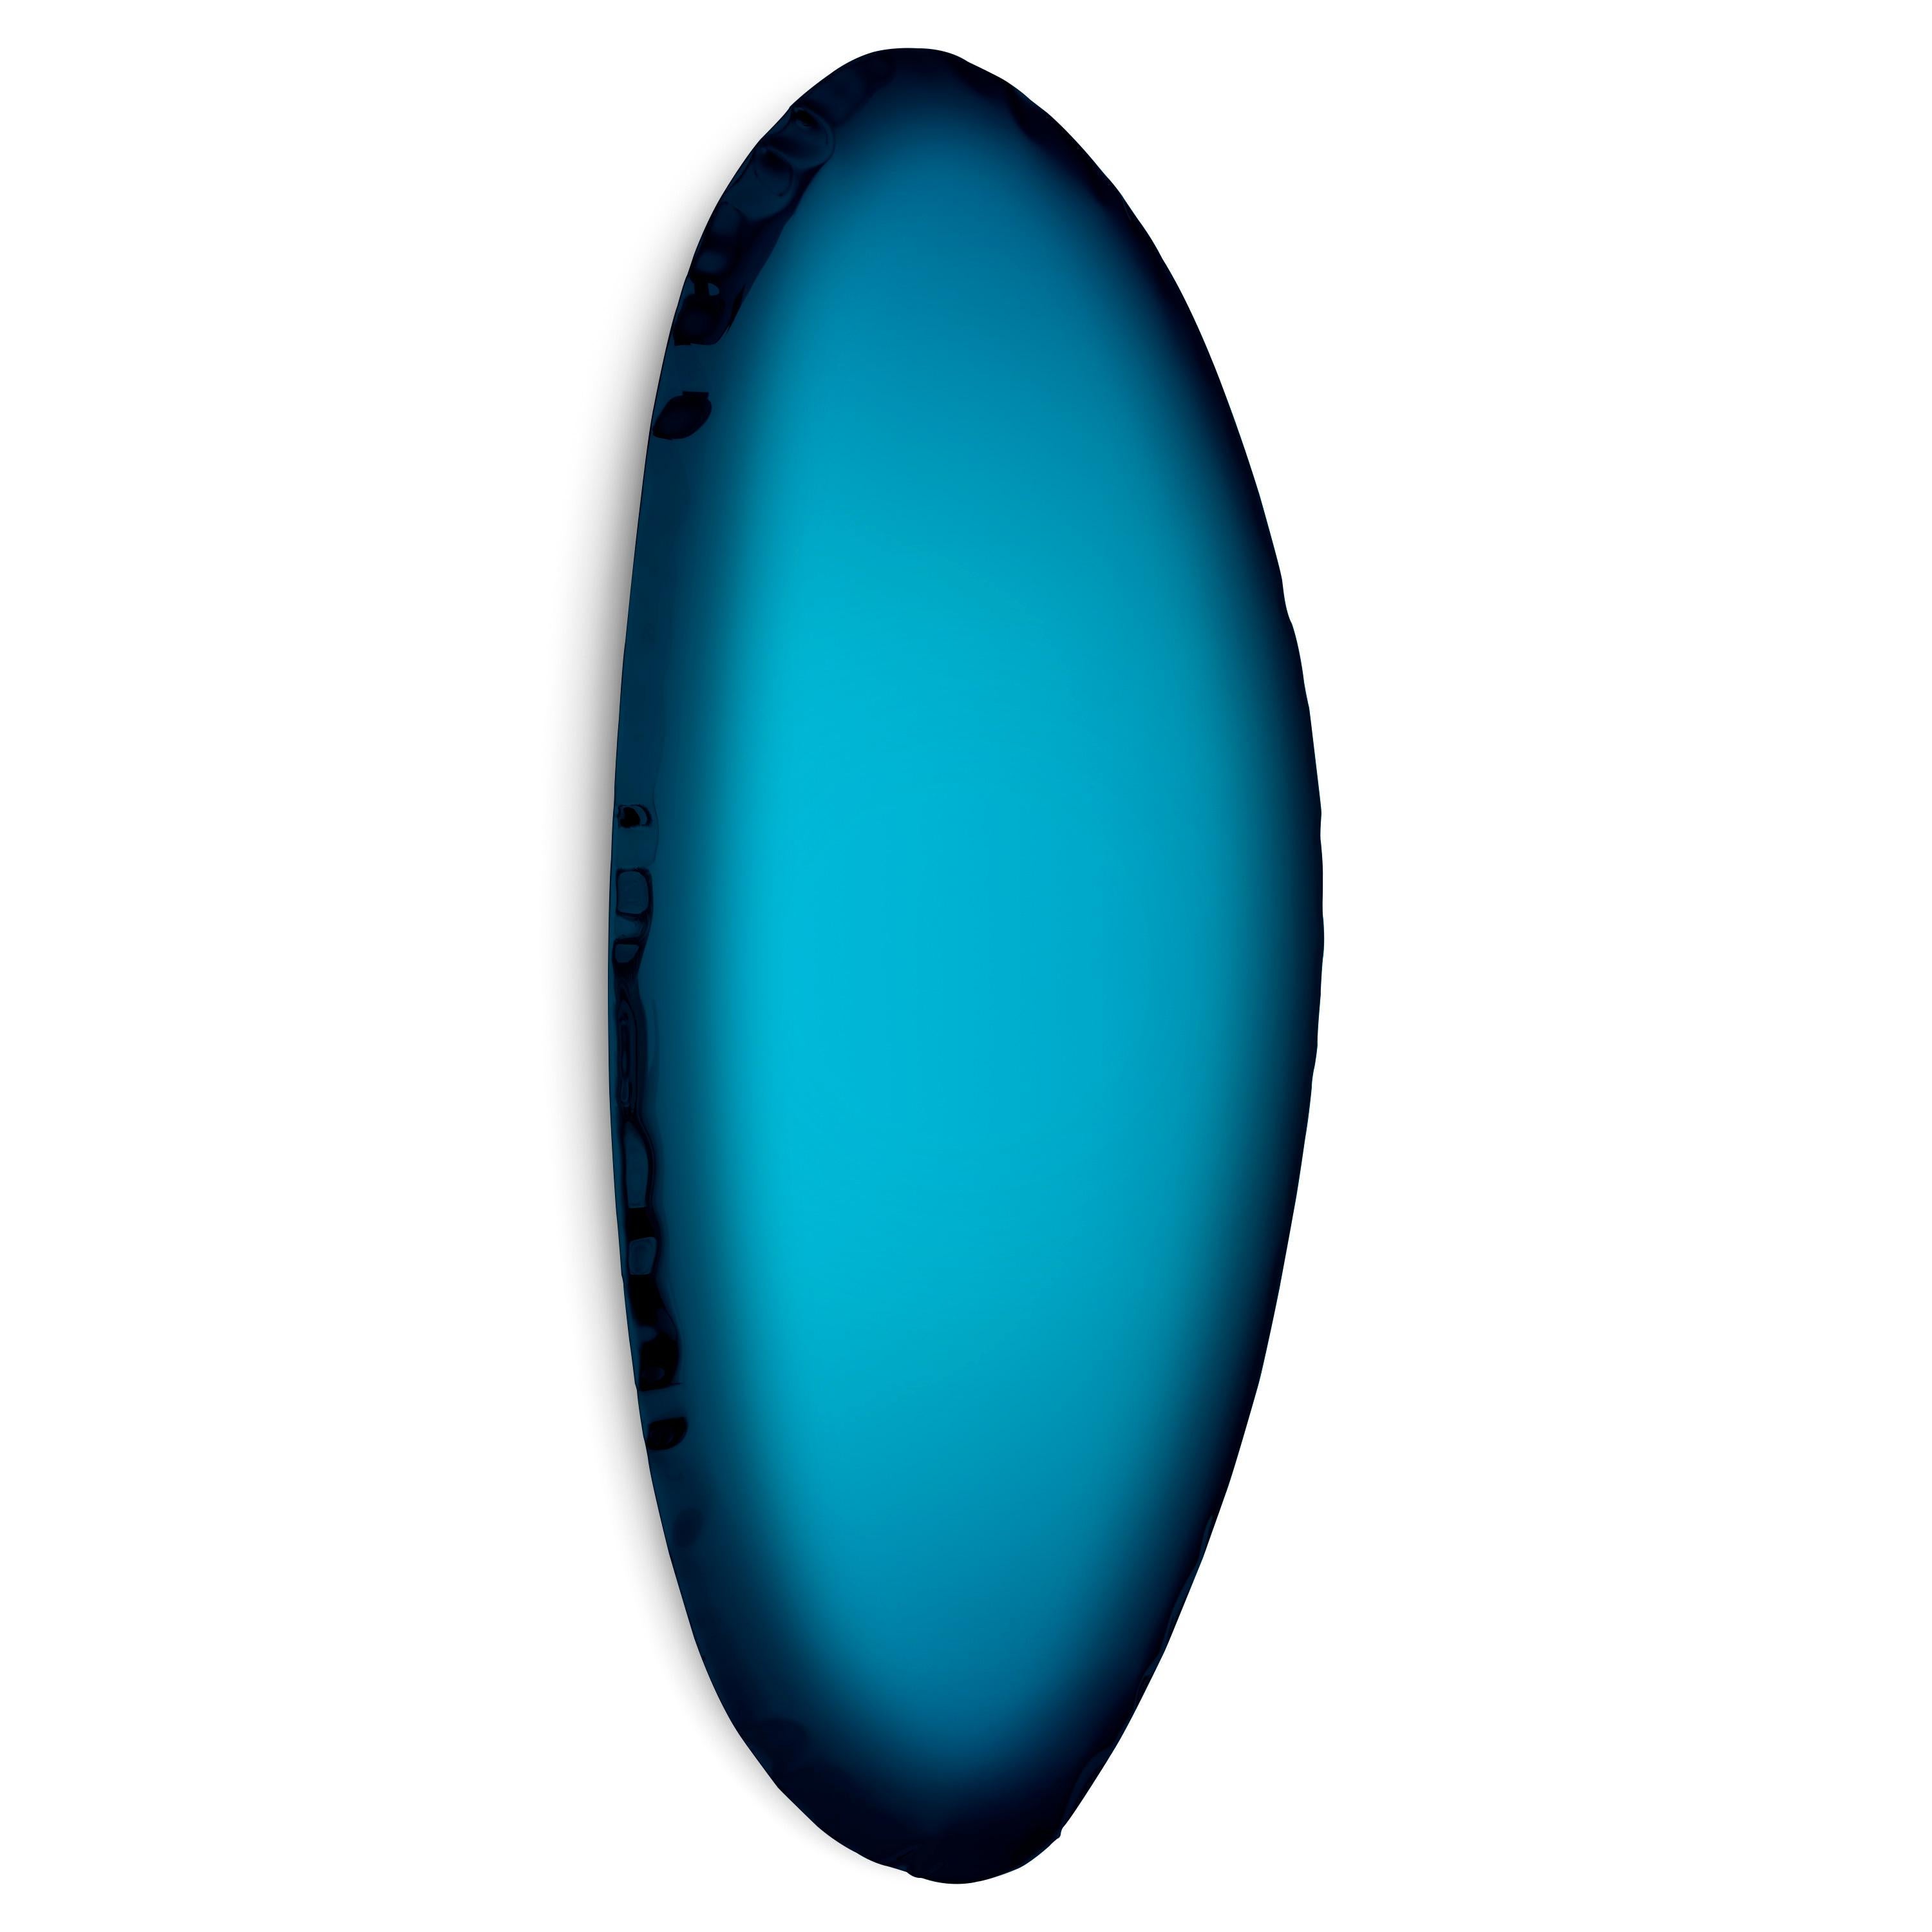 Deep Space Blue Tafla O4 wall mirror by Zieta
Dimensions: D 6 x W 64 x H 123 cm 
Material: Stainless steel.
Finish: Deep Space Blue.
Available finishes: Stainless Steel, White Matt, Sapphire/Emerald, Sapphire, Emerald, Deep space blue, Dark matter,